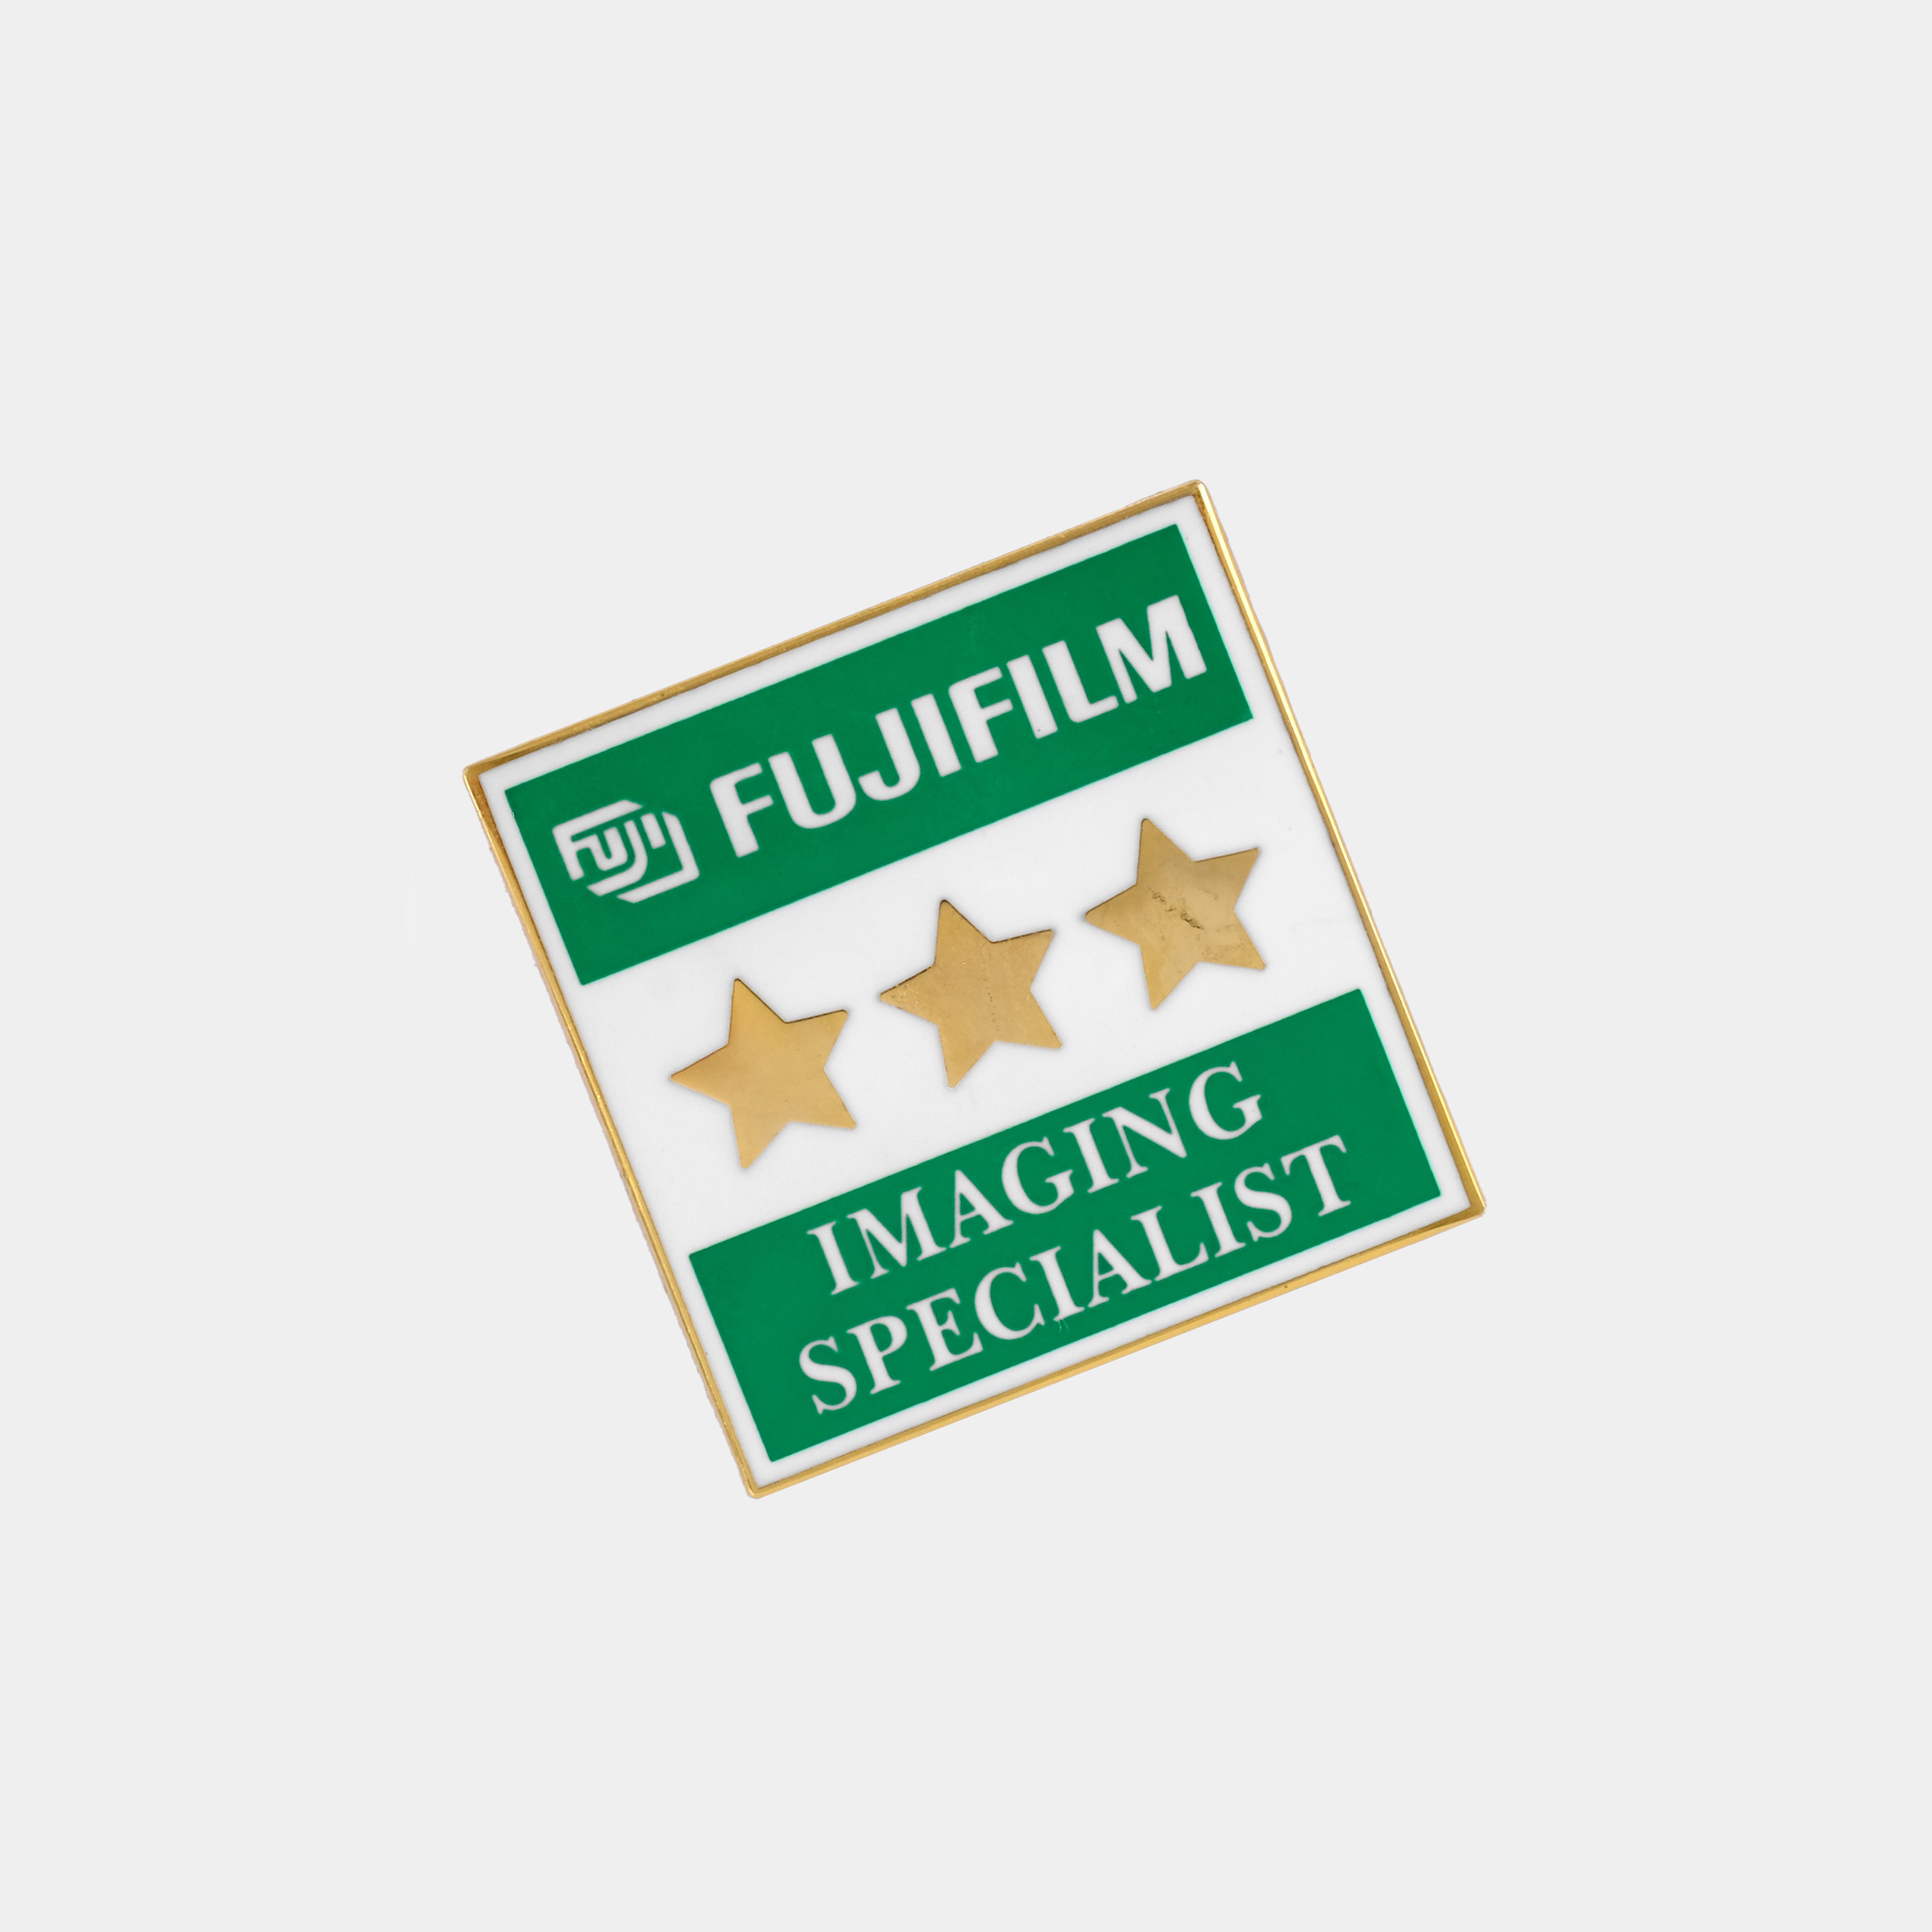 Fujifilm 3-Star Imaging Specialist Vintage Enamel Pin